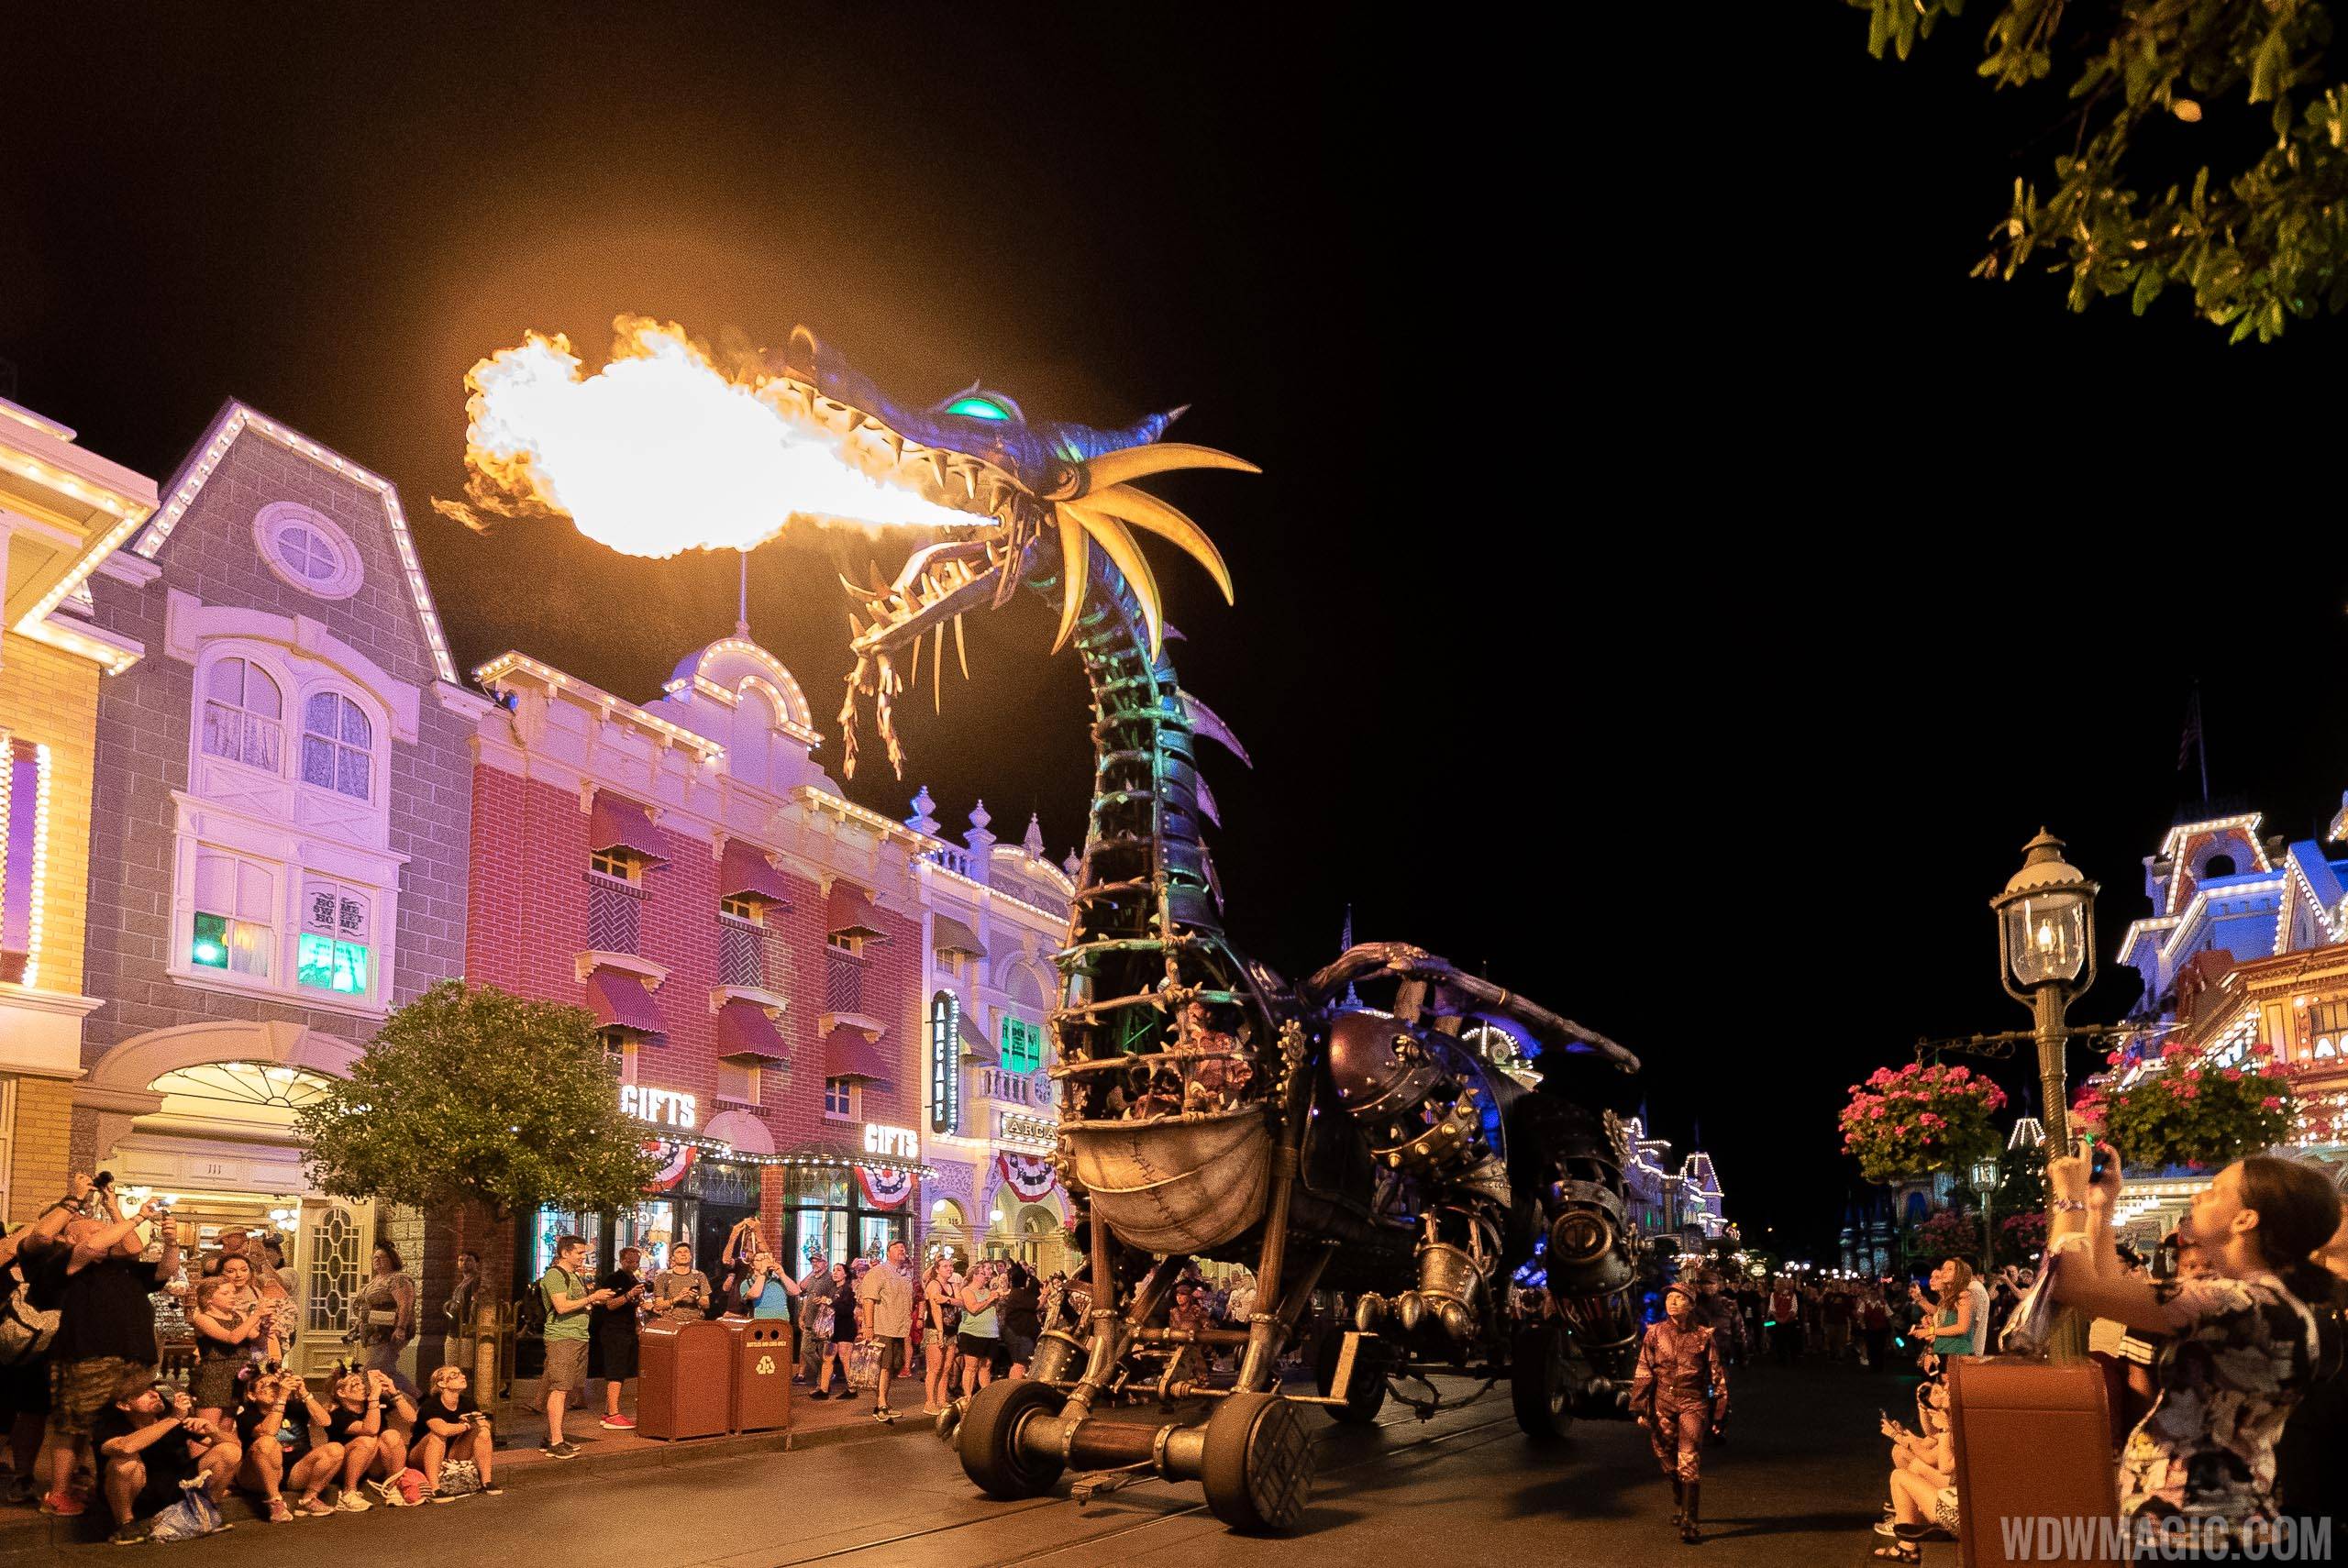 Walt Disney World will suspend some fire effects following fire at Fantasmic! in Disneyland